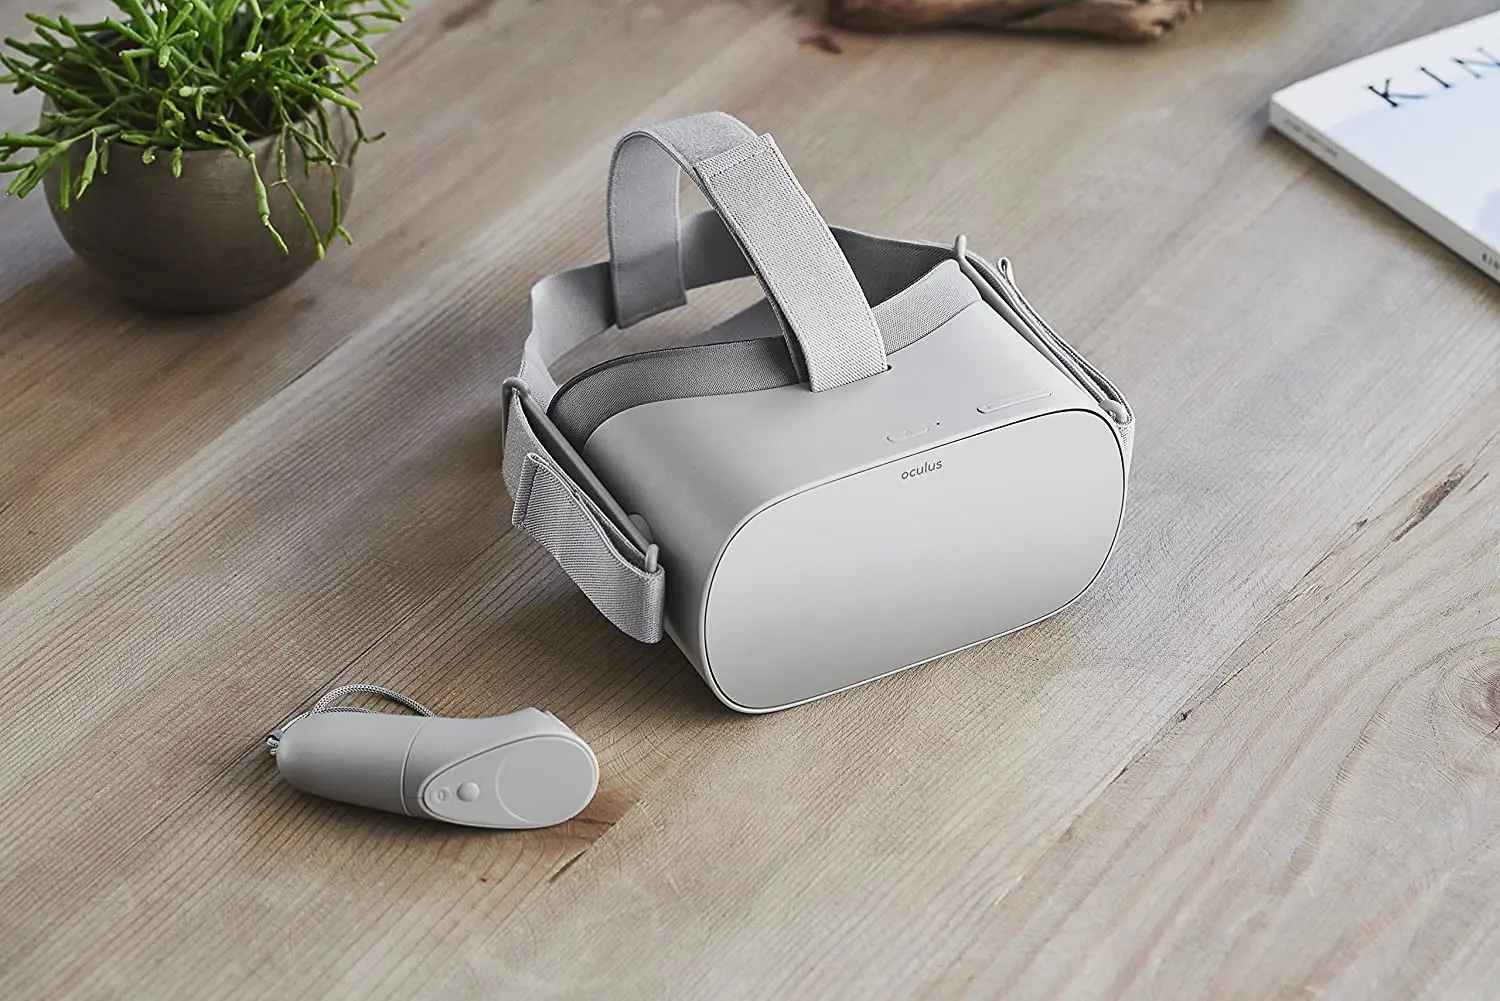 Tanio Original Oculus Go Standalone Virtual Reality Headset 32GB Wifi with 72Hz sklep